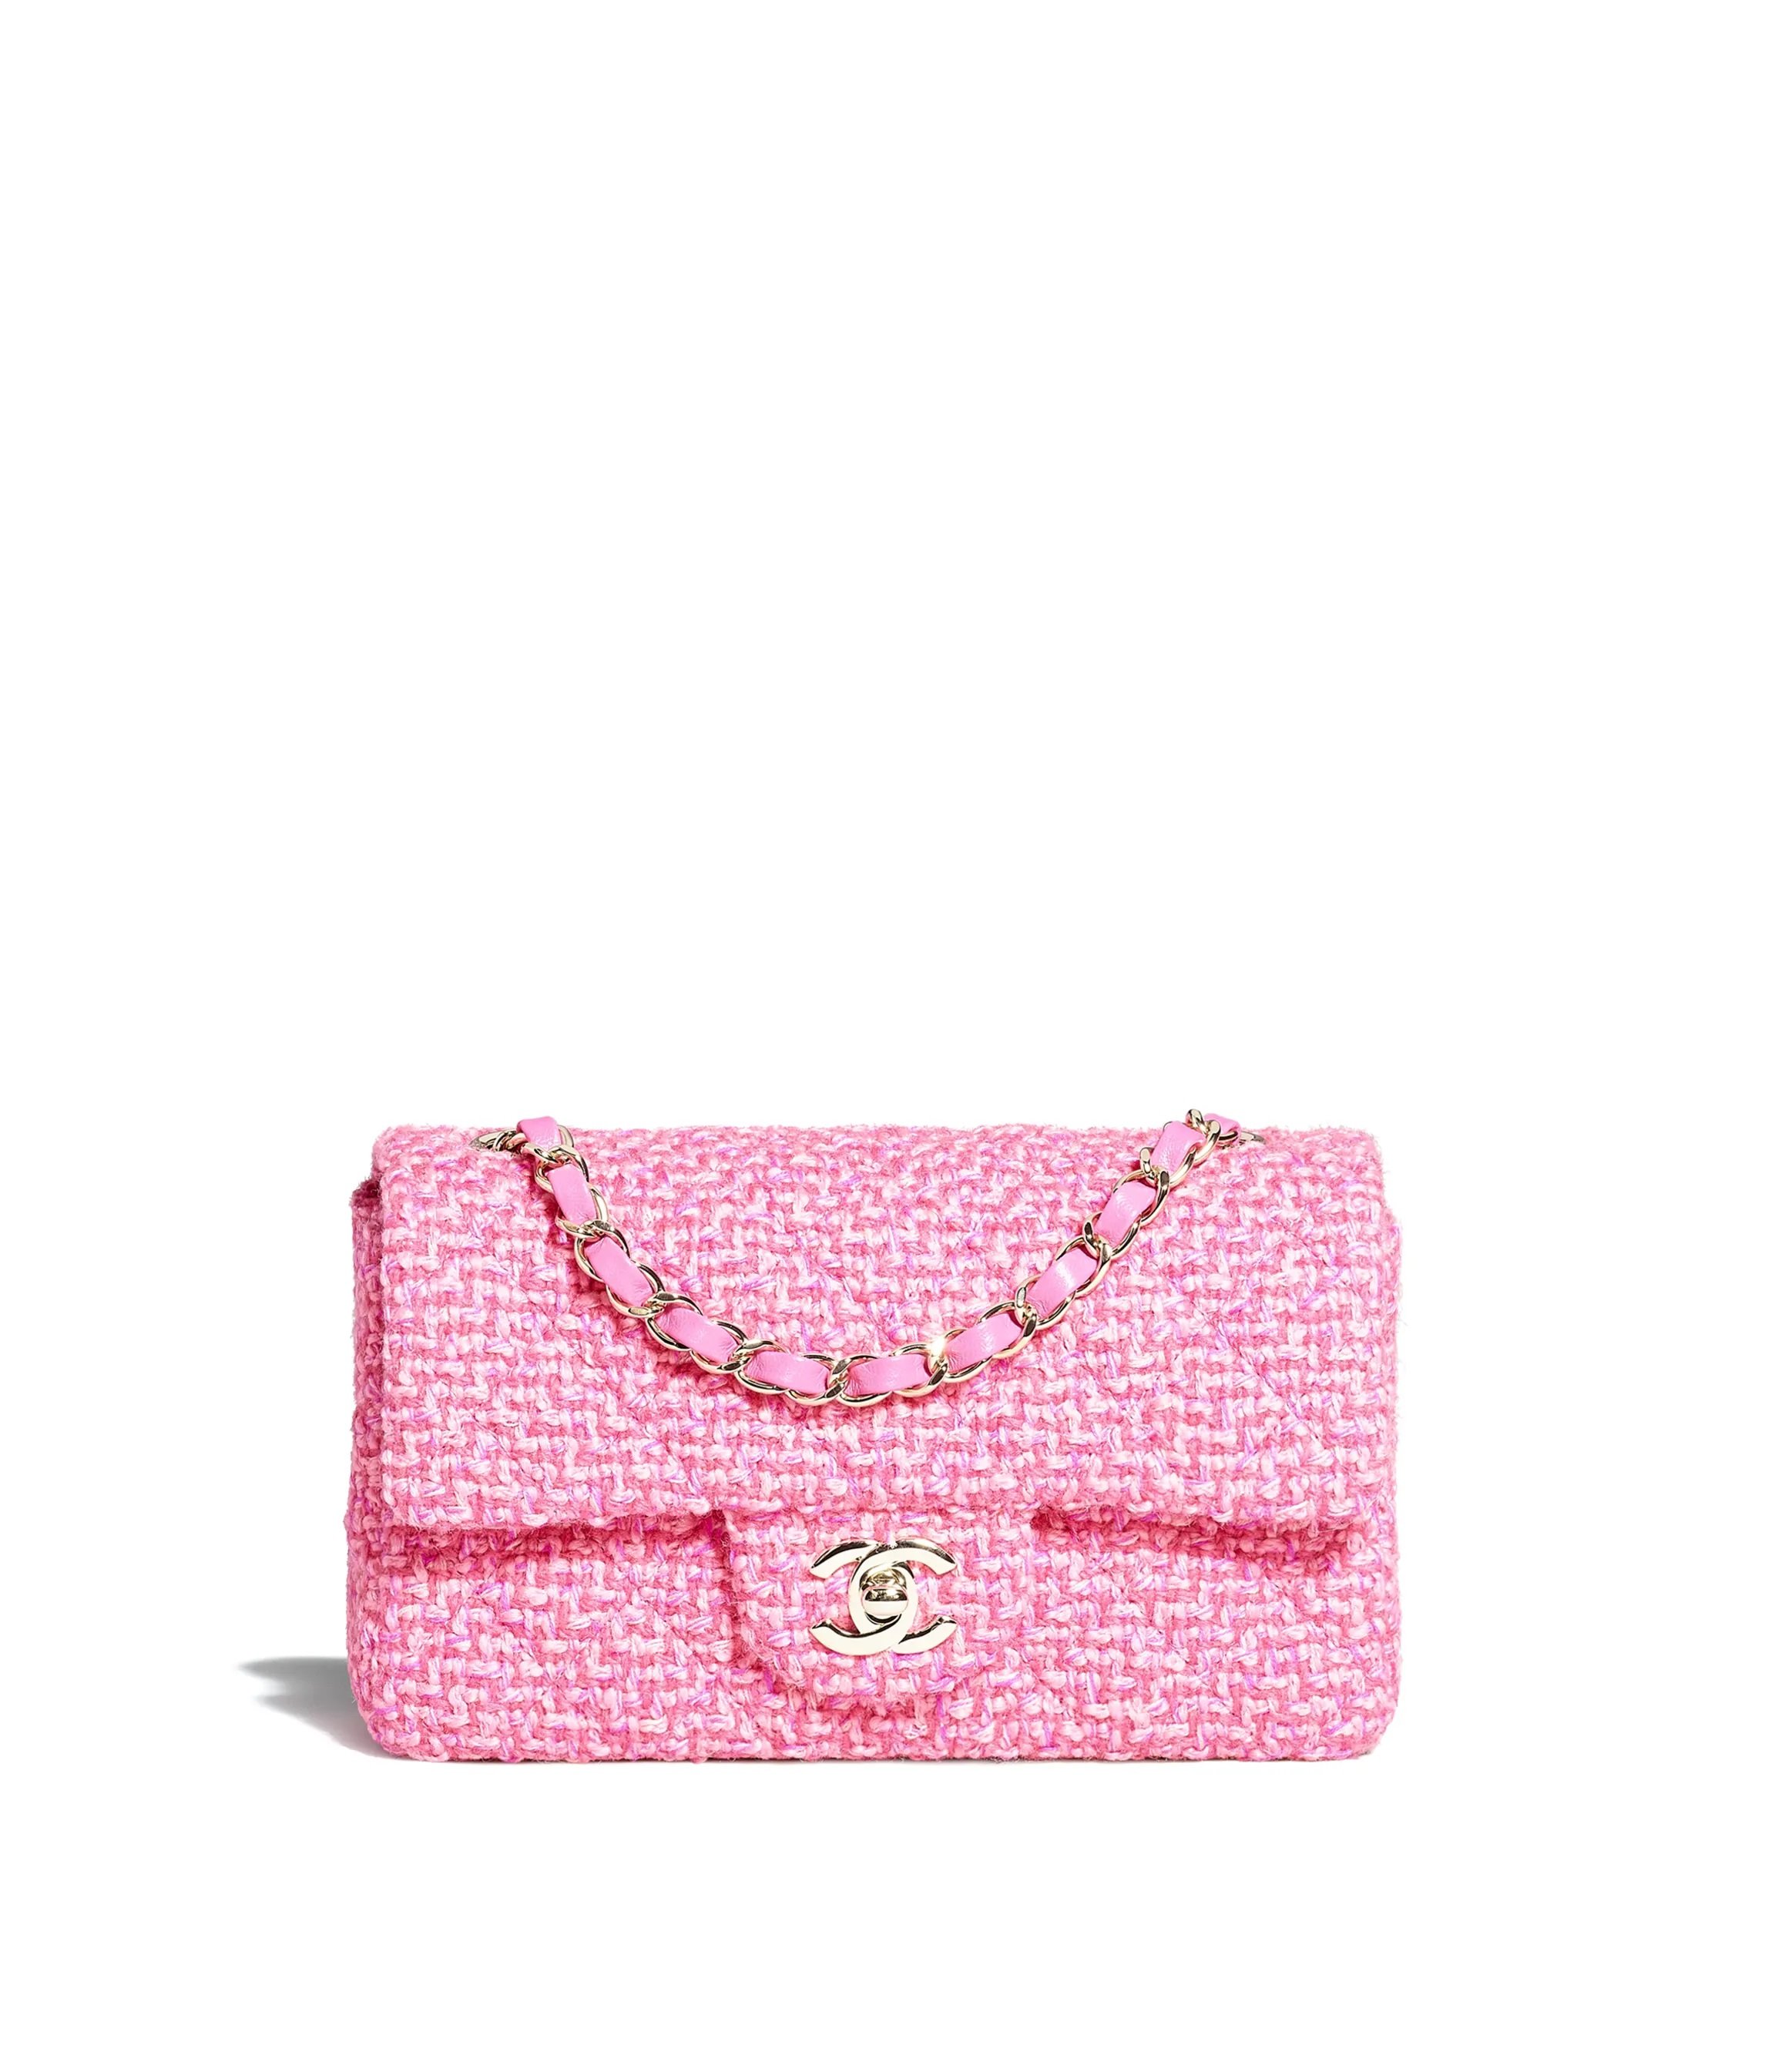 Chanel 2.55 Flap Bag in Pink, Dark Pink & Fuchsia Wool Tweed — UFO